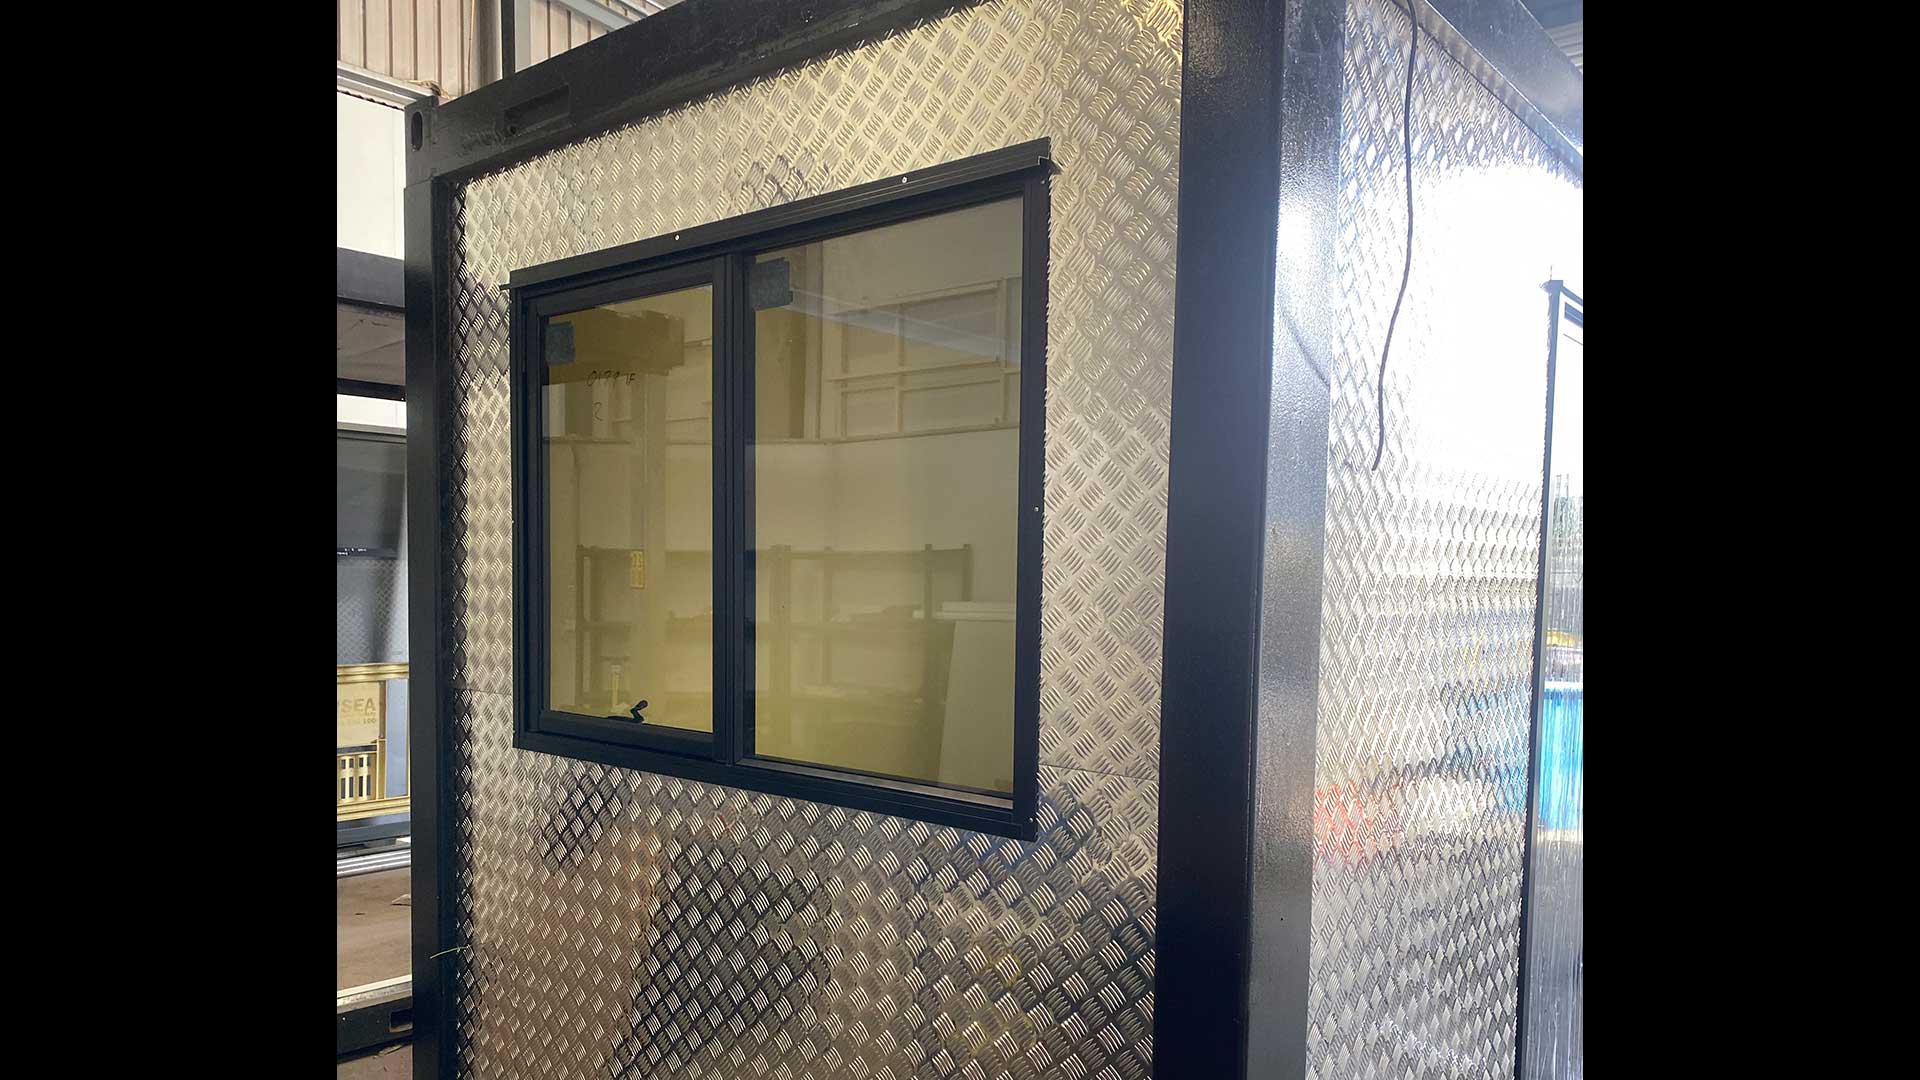 Tiny Home - Barossa Valley checkerplate interior for blocking communications